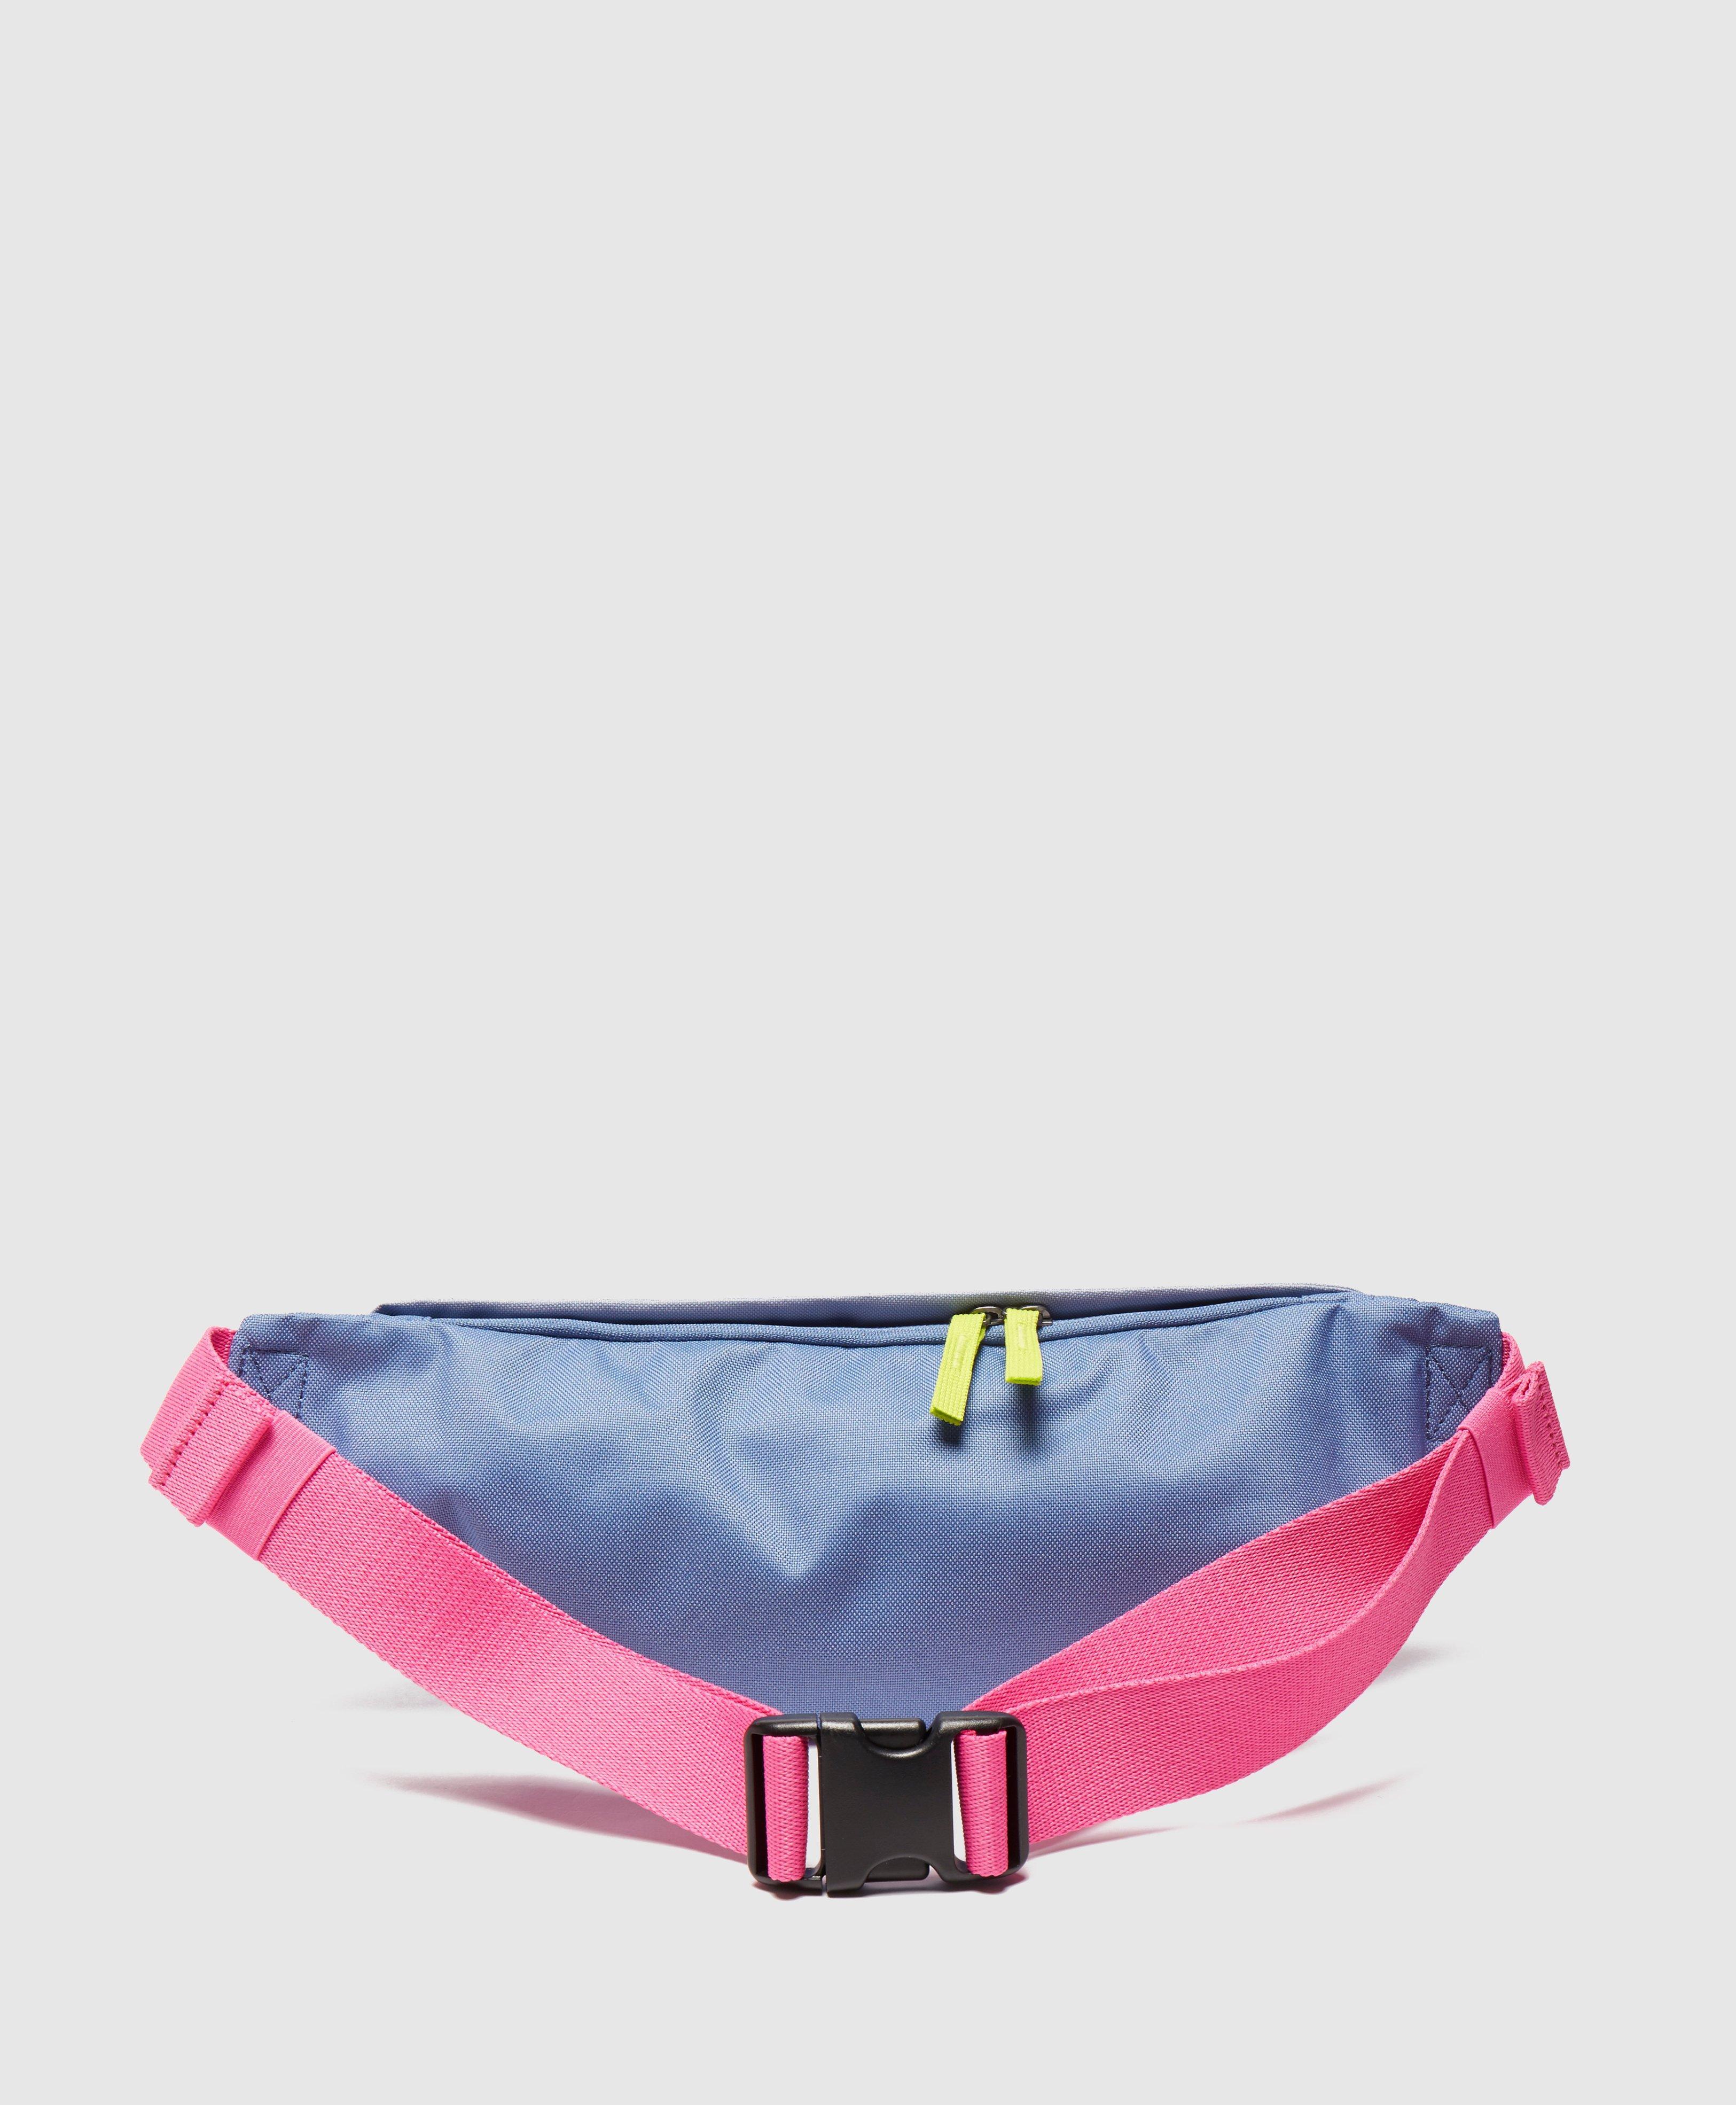 Nike Heritage Bum Bag in Blue for Men - Lyst